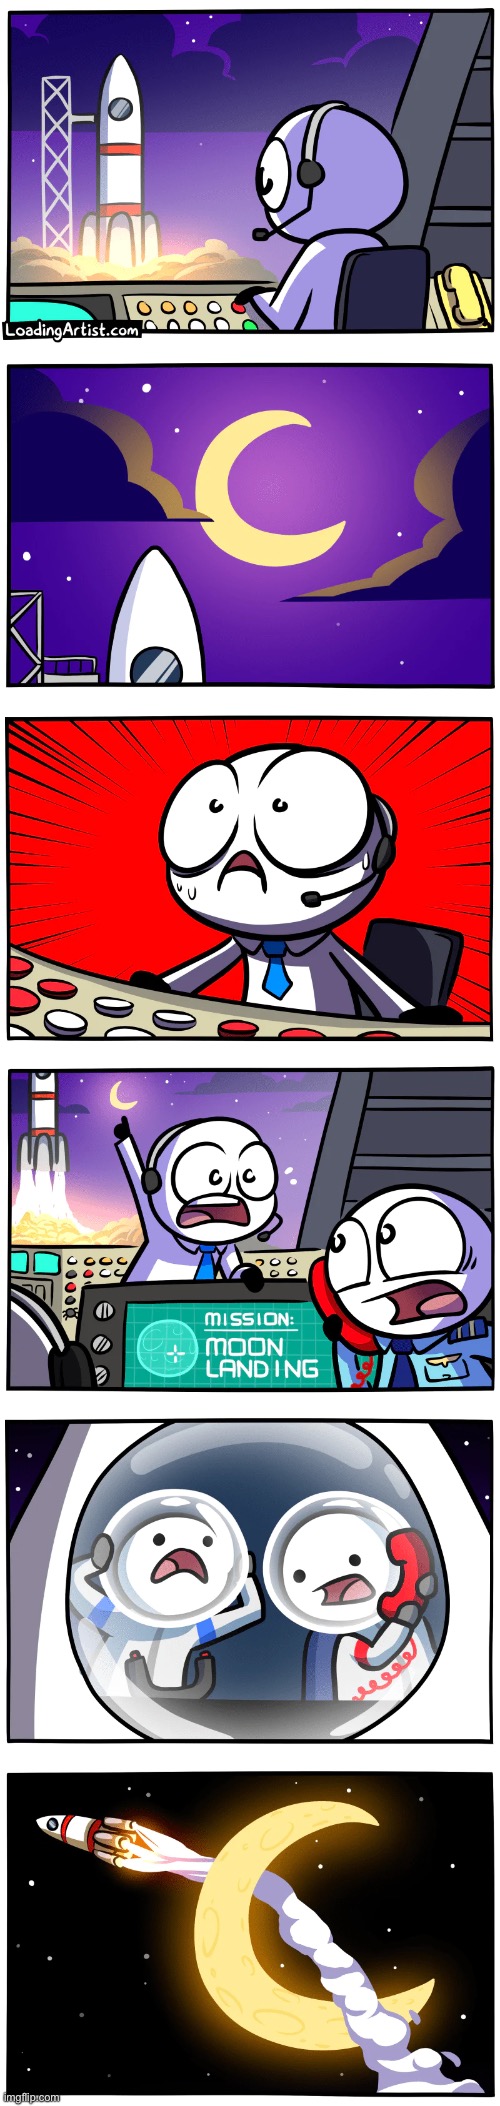 Moon landing | image tagged in astronaut,moon,moon landing,comics/cartoons,comics | made w/ Imgflip meme maker